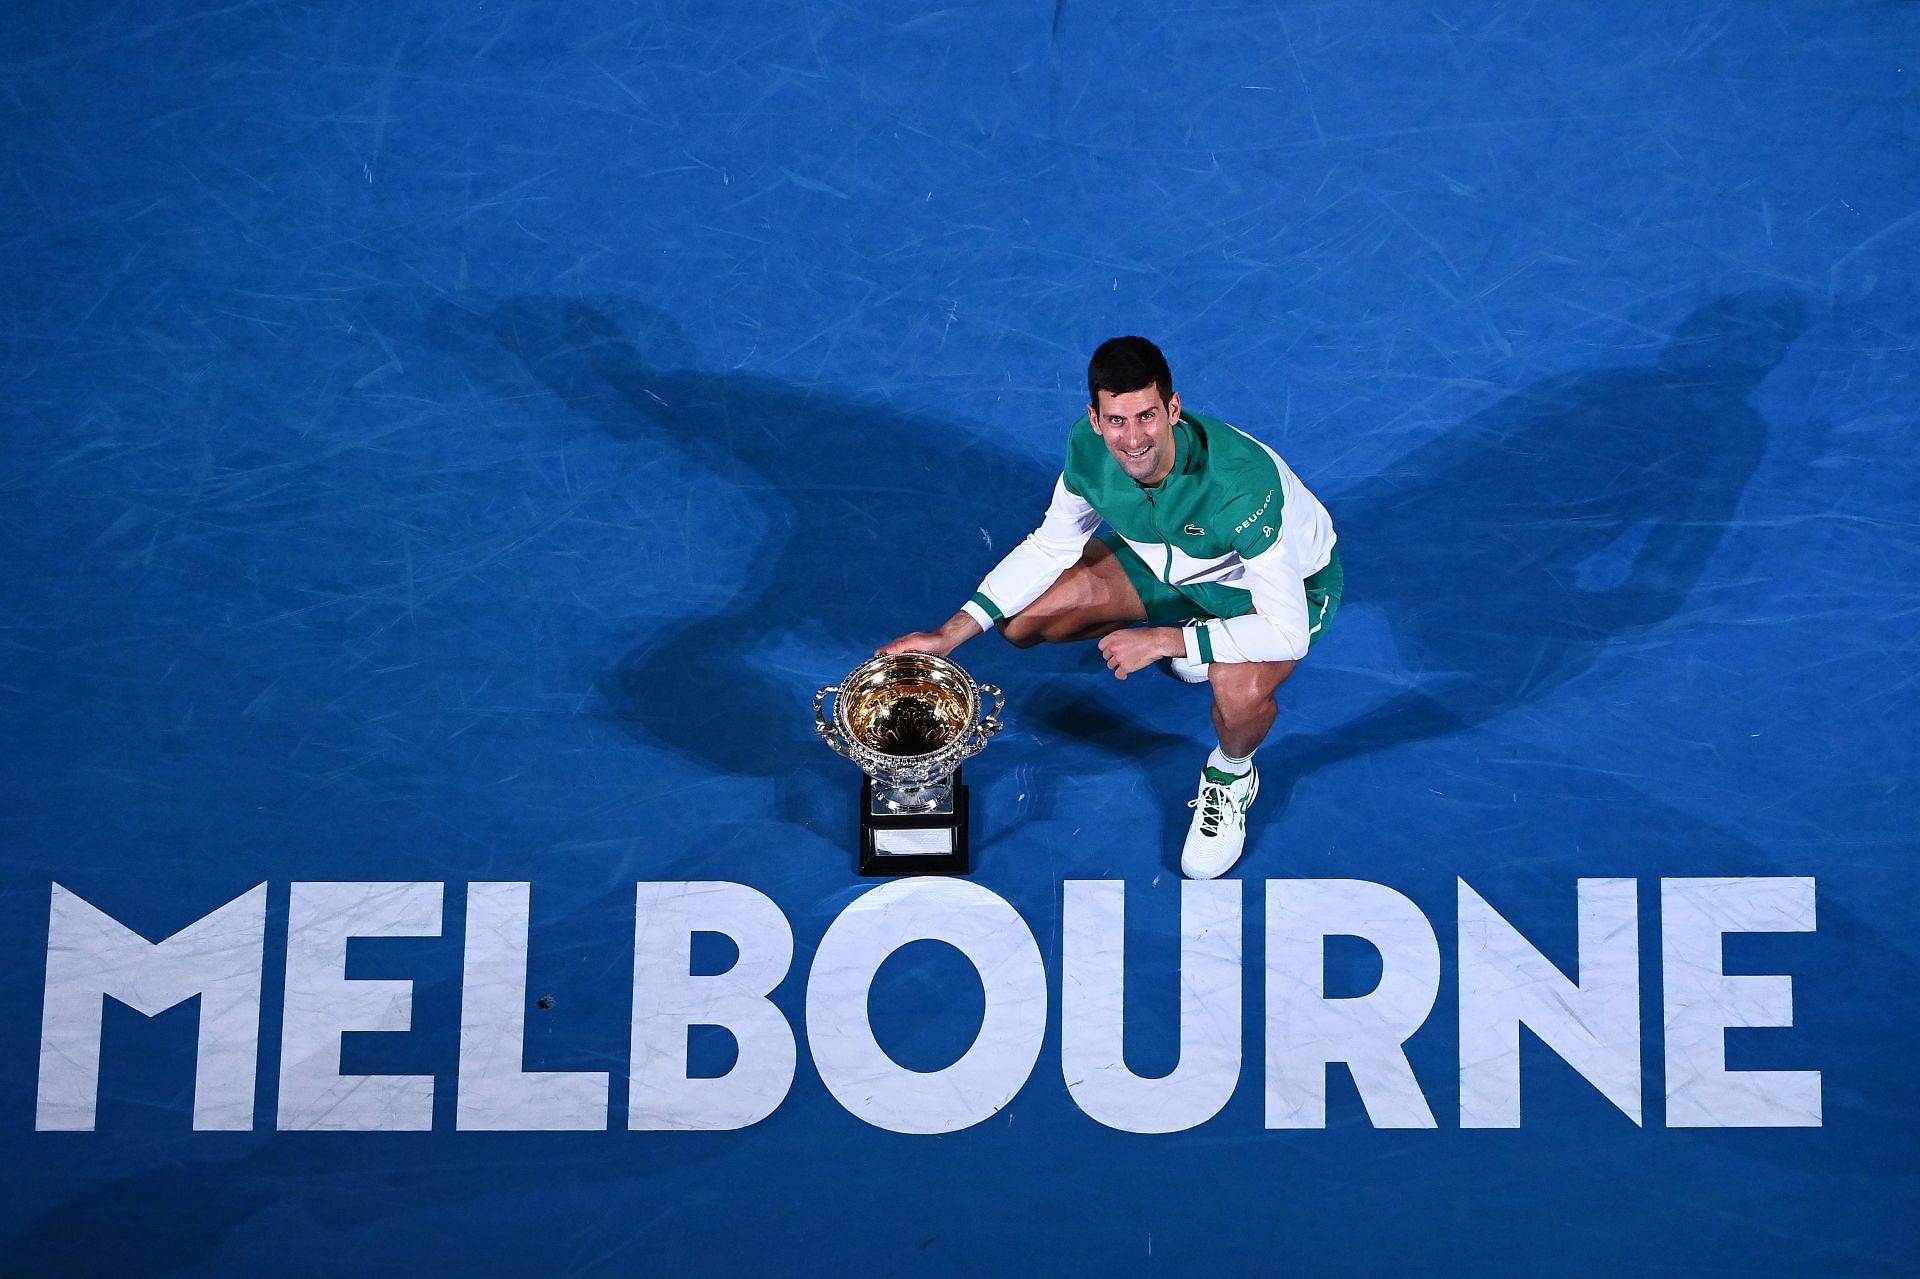 Novak Djokovic at the 2021 Australian Open.